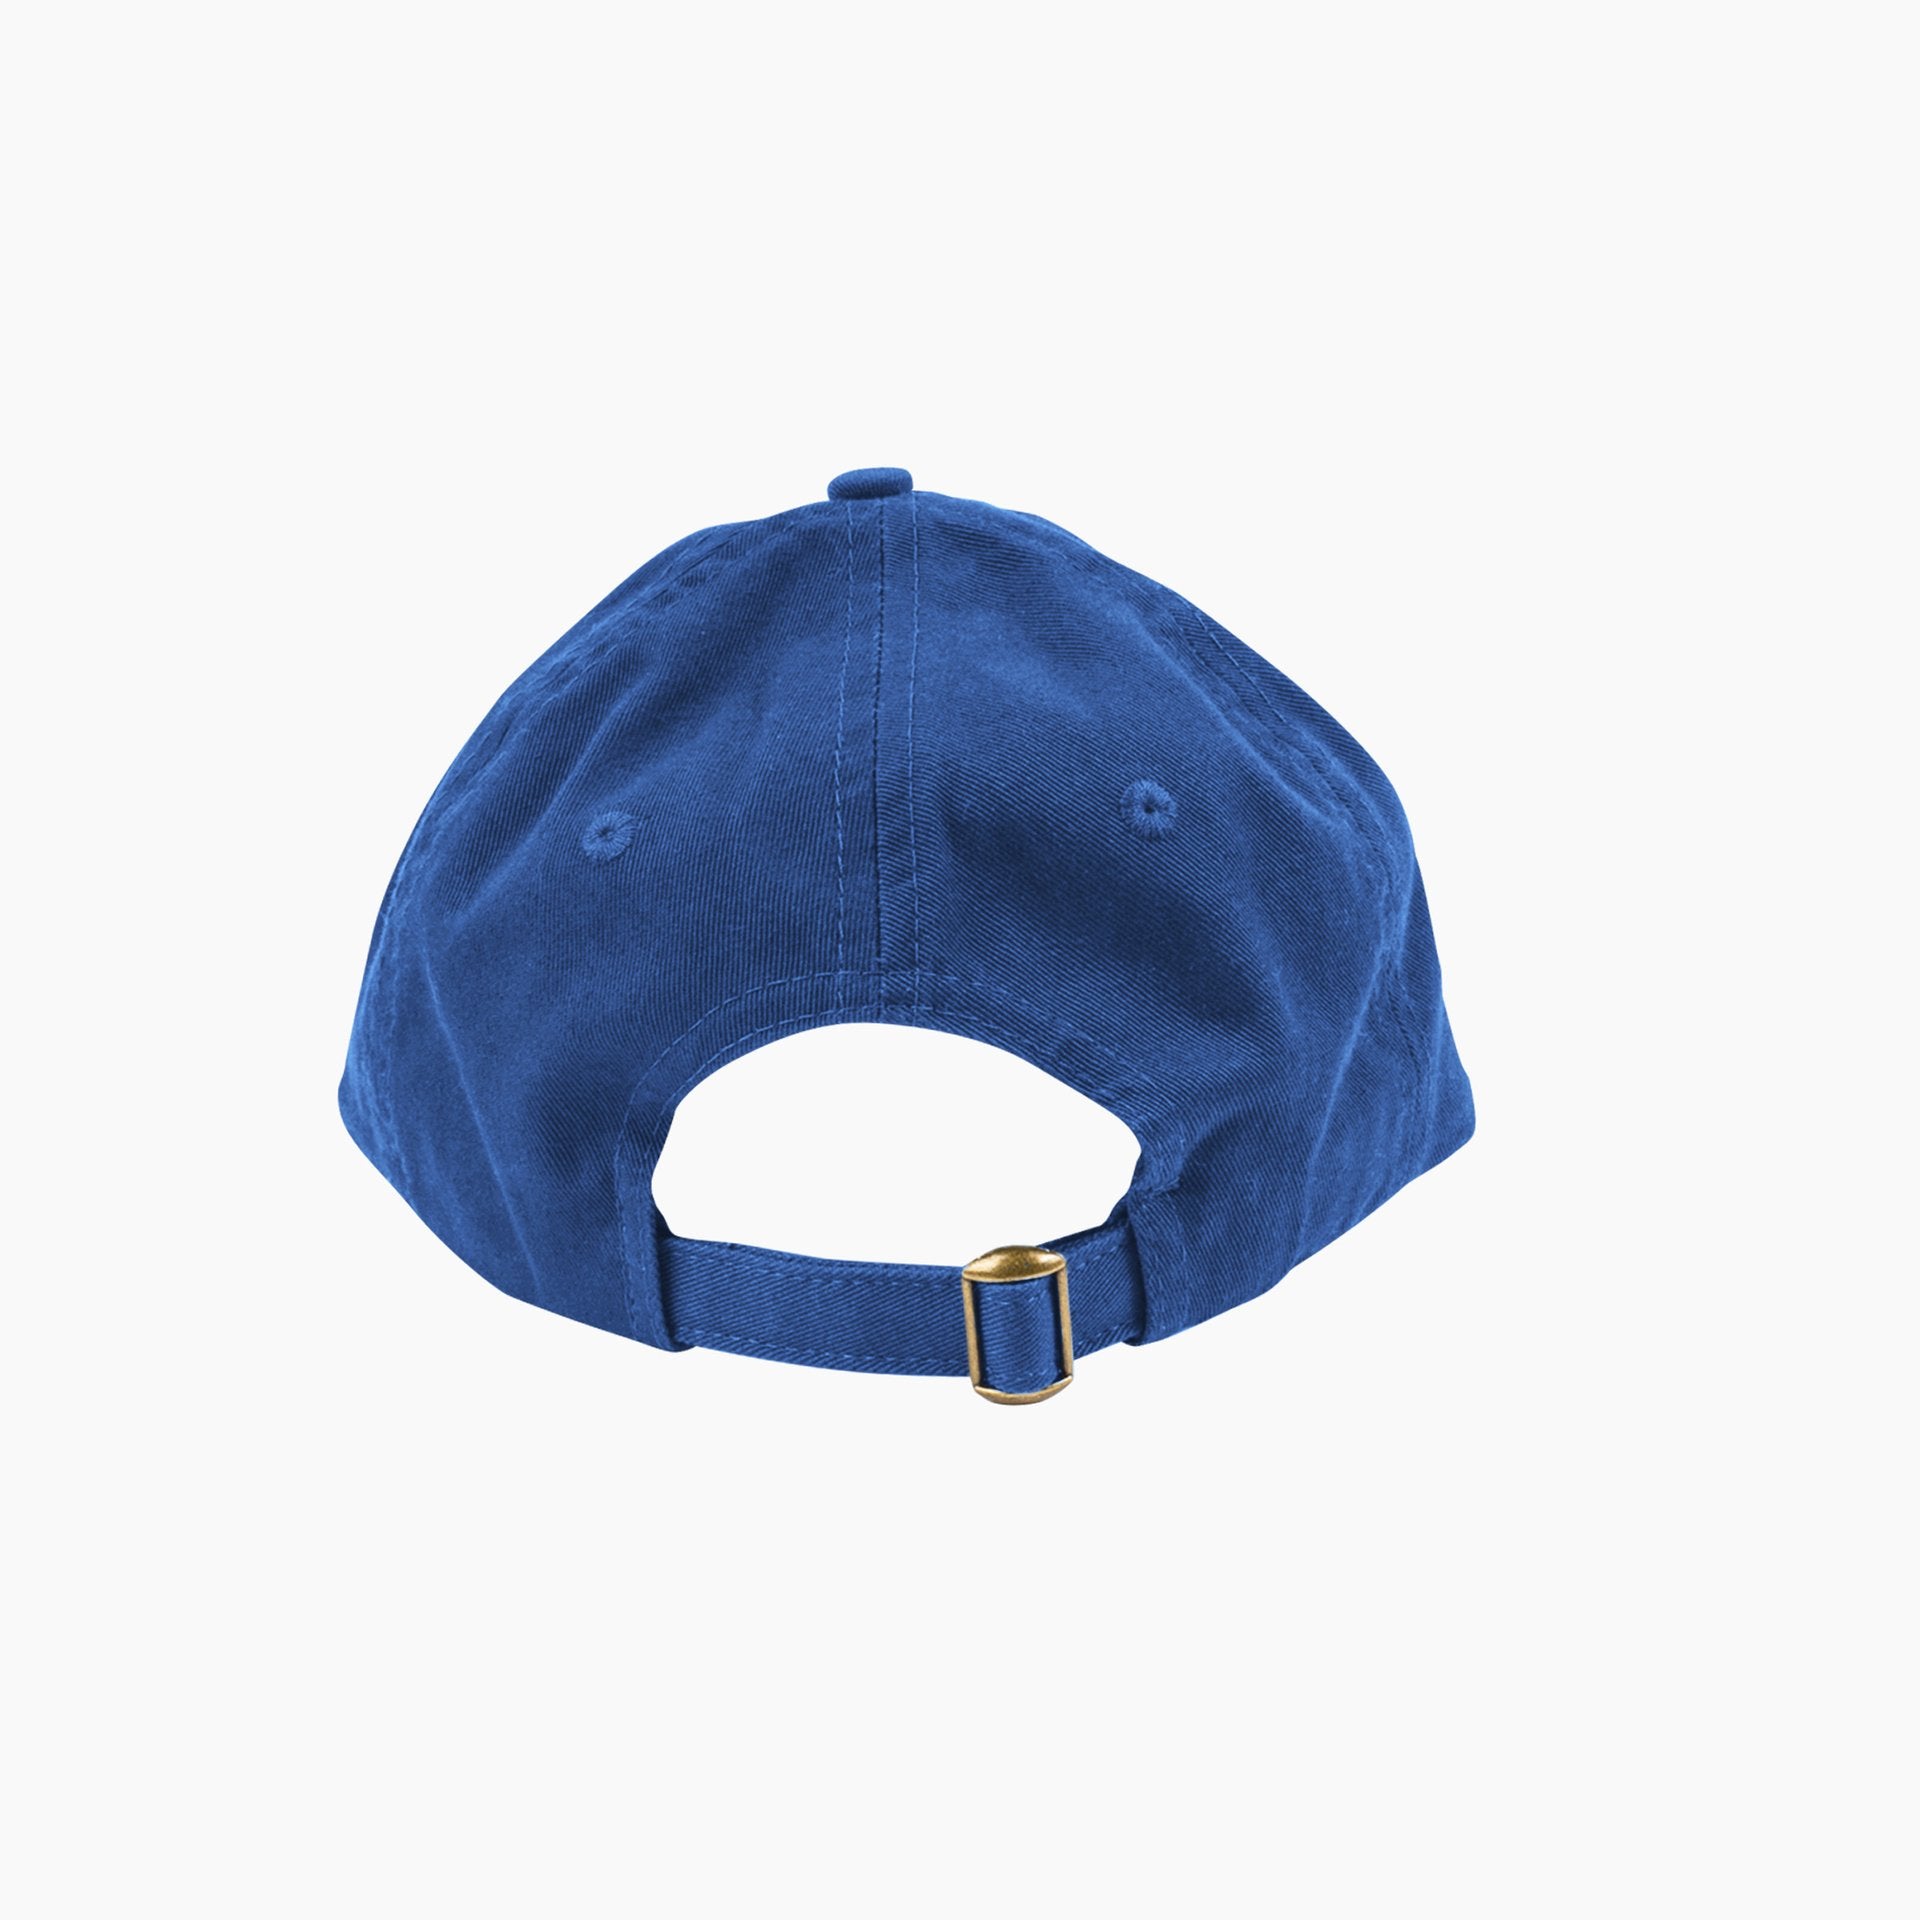 Poketo Creative Cap in Blue